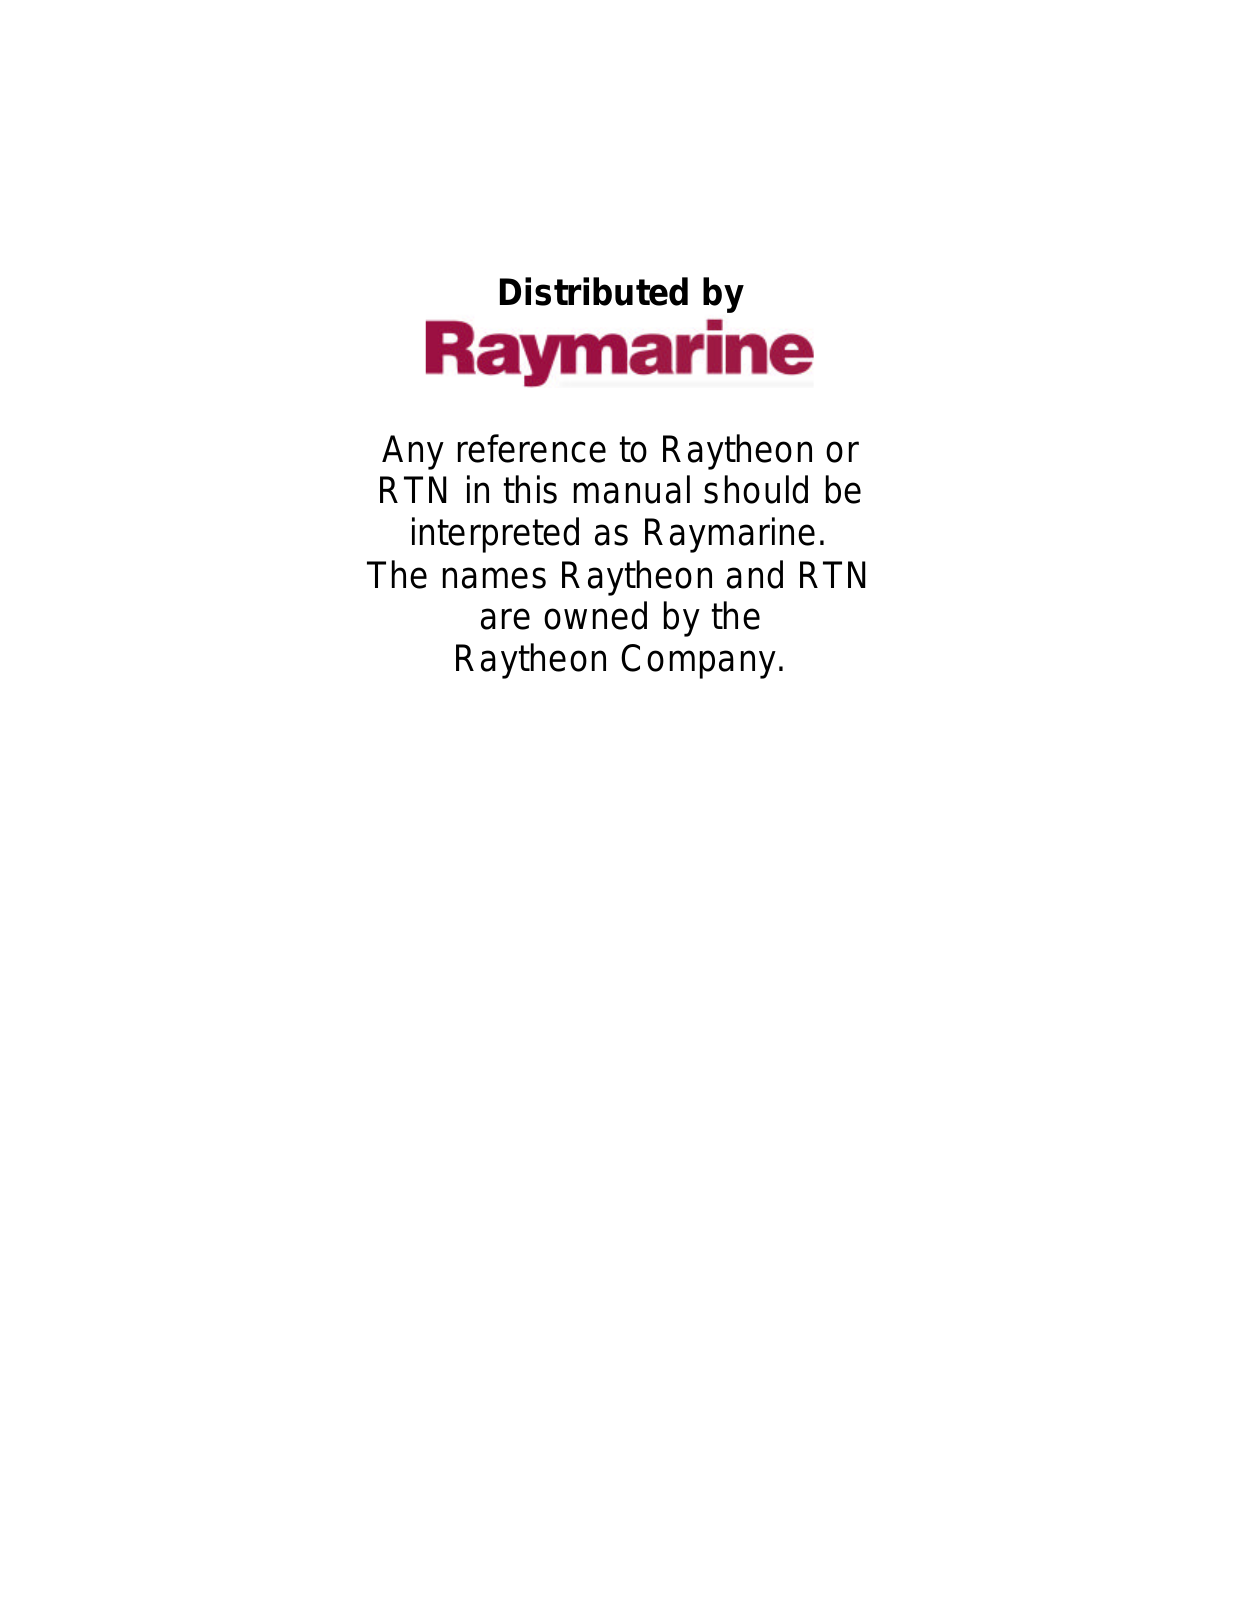 Raymarine APELCO 4500 Manual